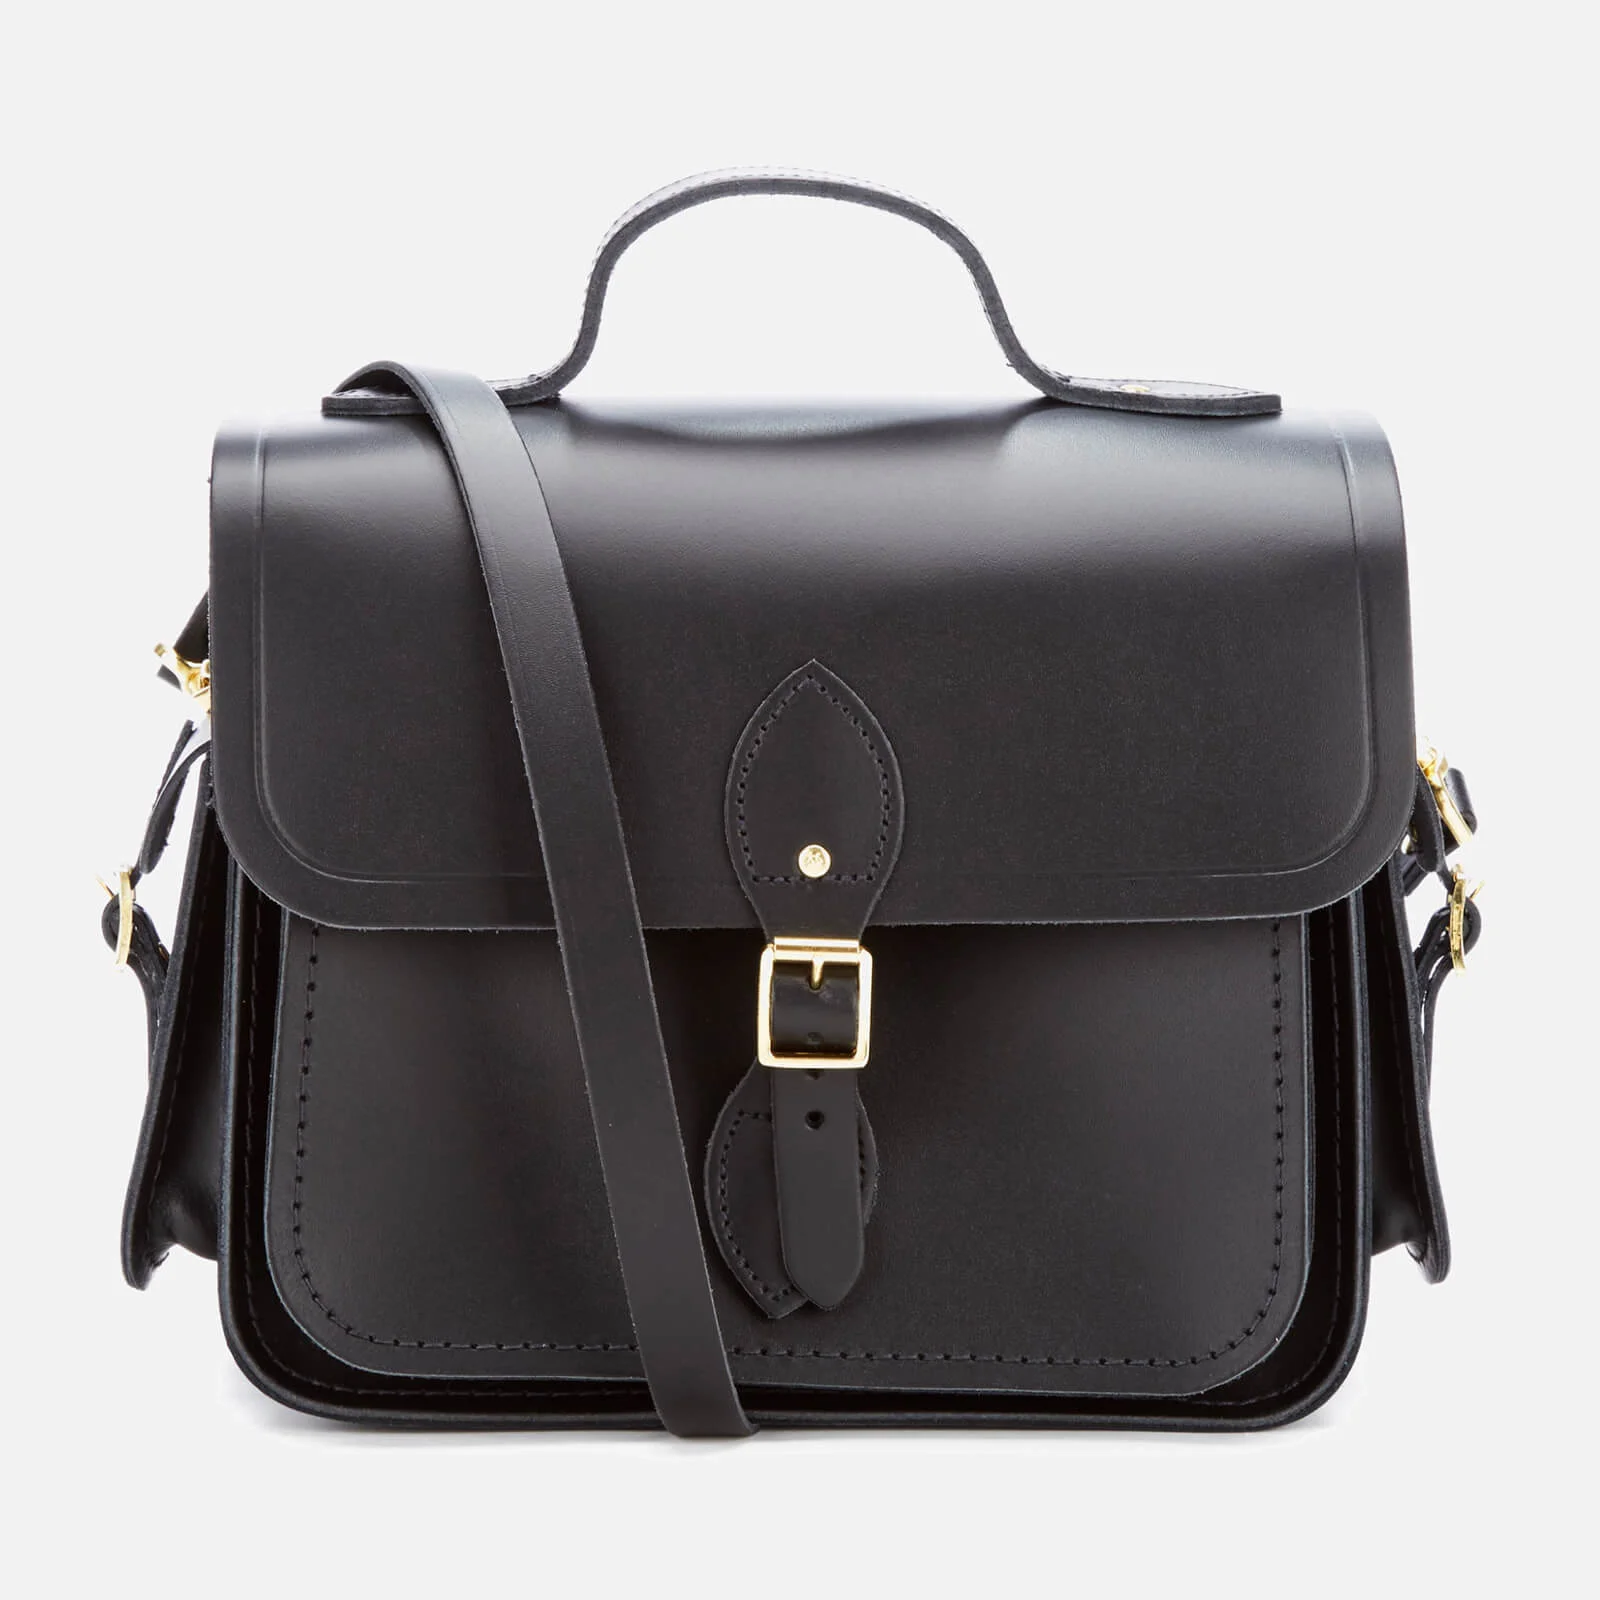 The Cambridge Satchel Company Women's Large Traveller Bag with Side Pockets - Black Image 1